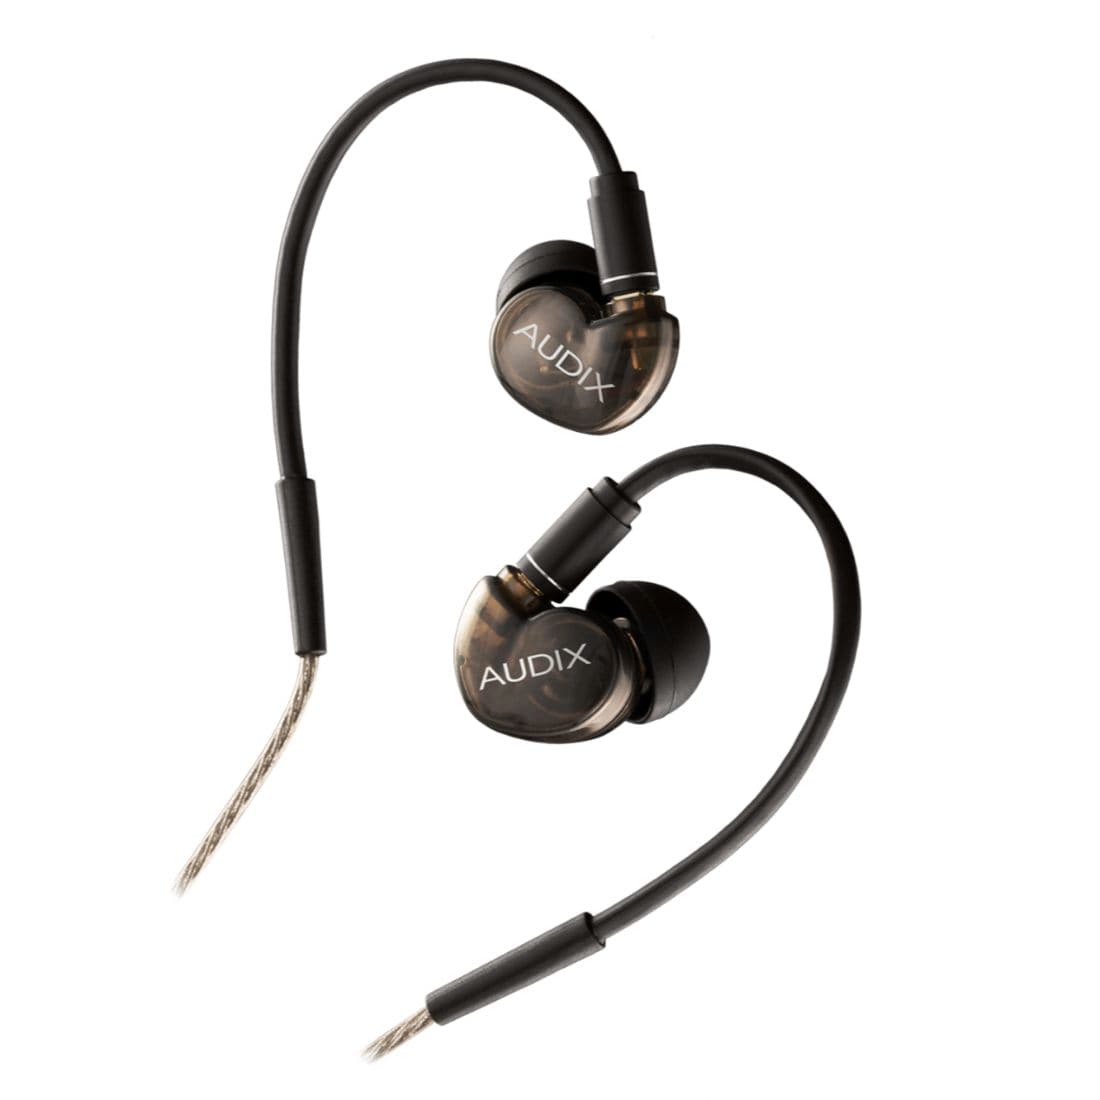 Audix Studio-Quality Earphones